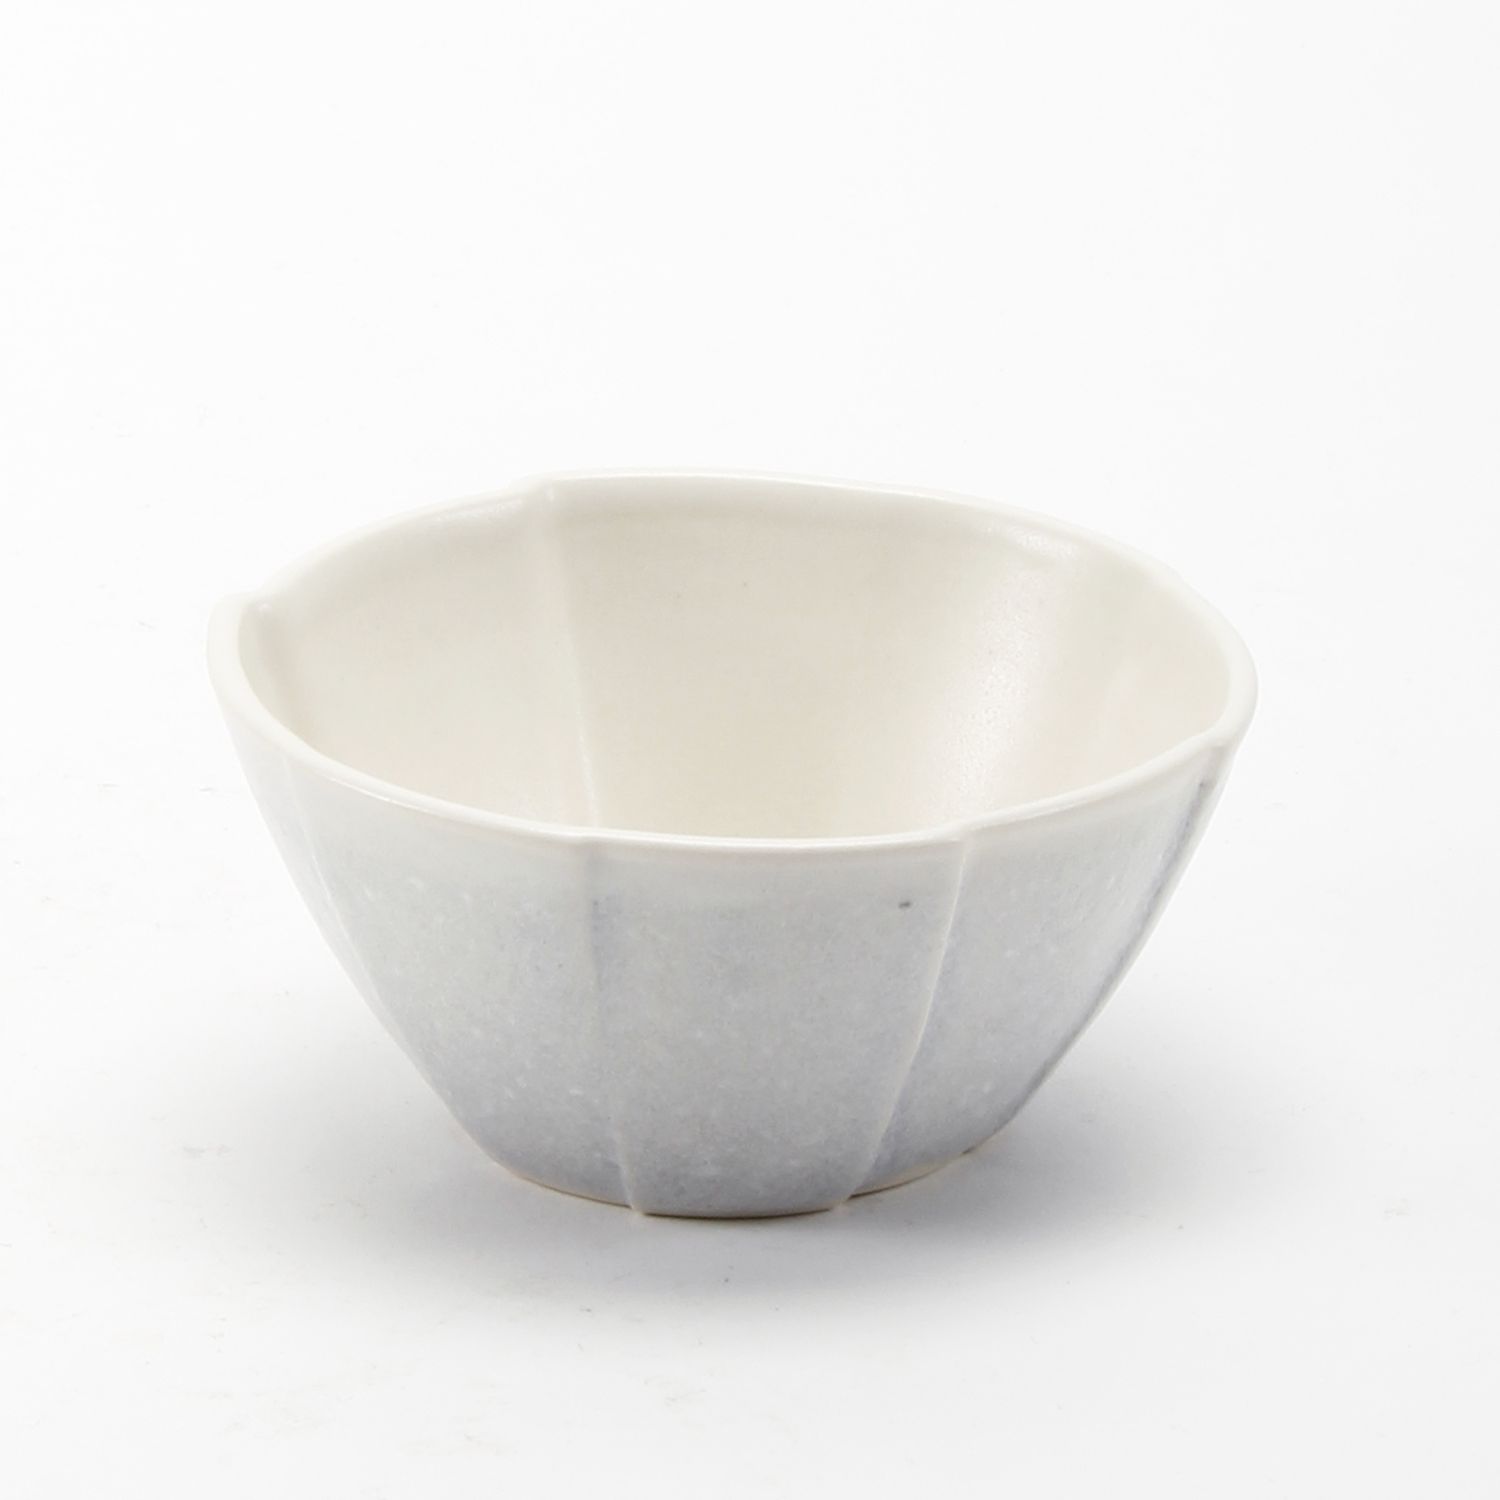 Karla Rivera: Small Bowl Product Image 2 of 3